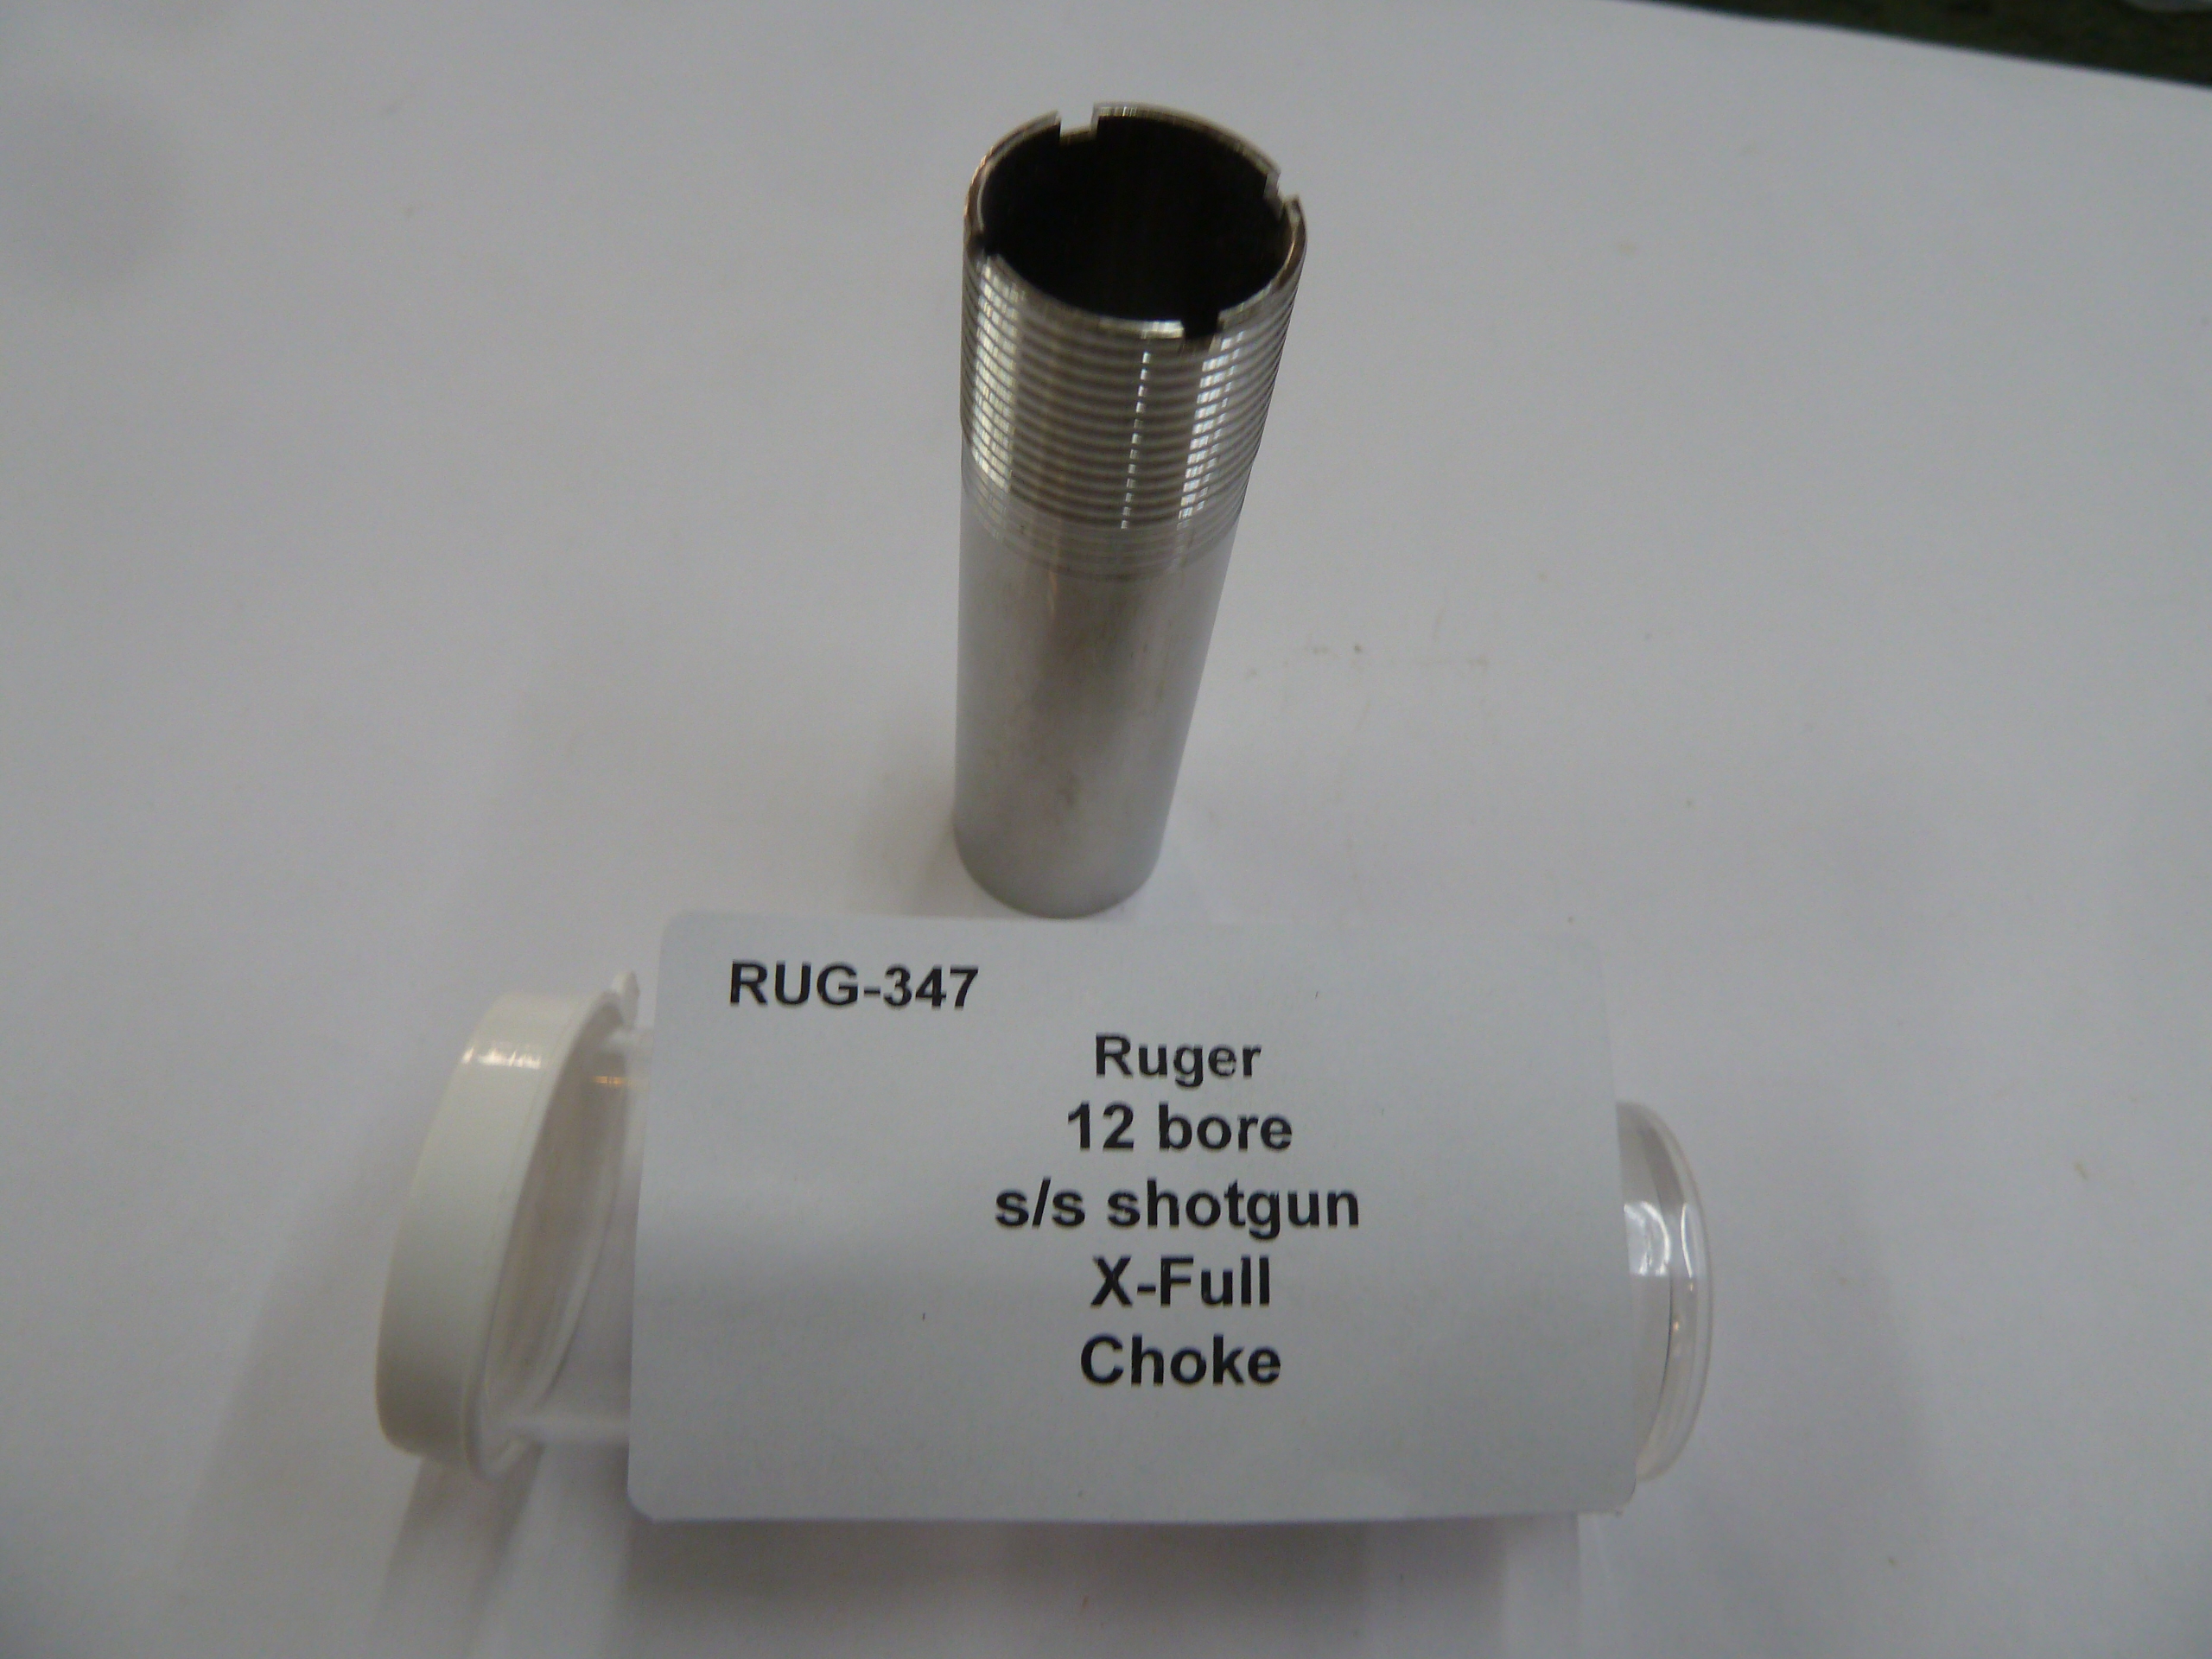 RUG-347 Ruger 12 bore ss shotgun X-full choke (2)